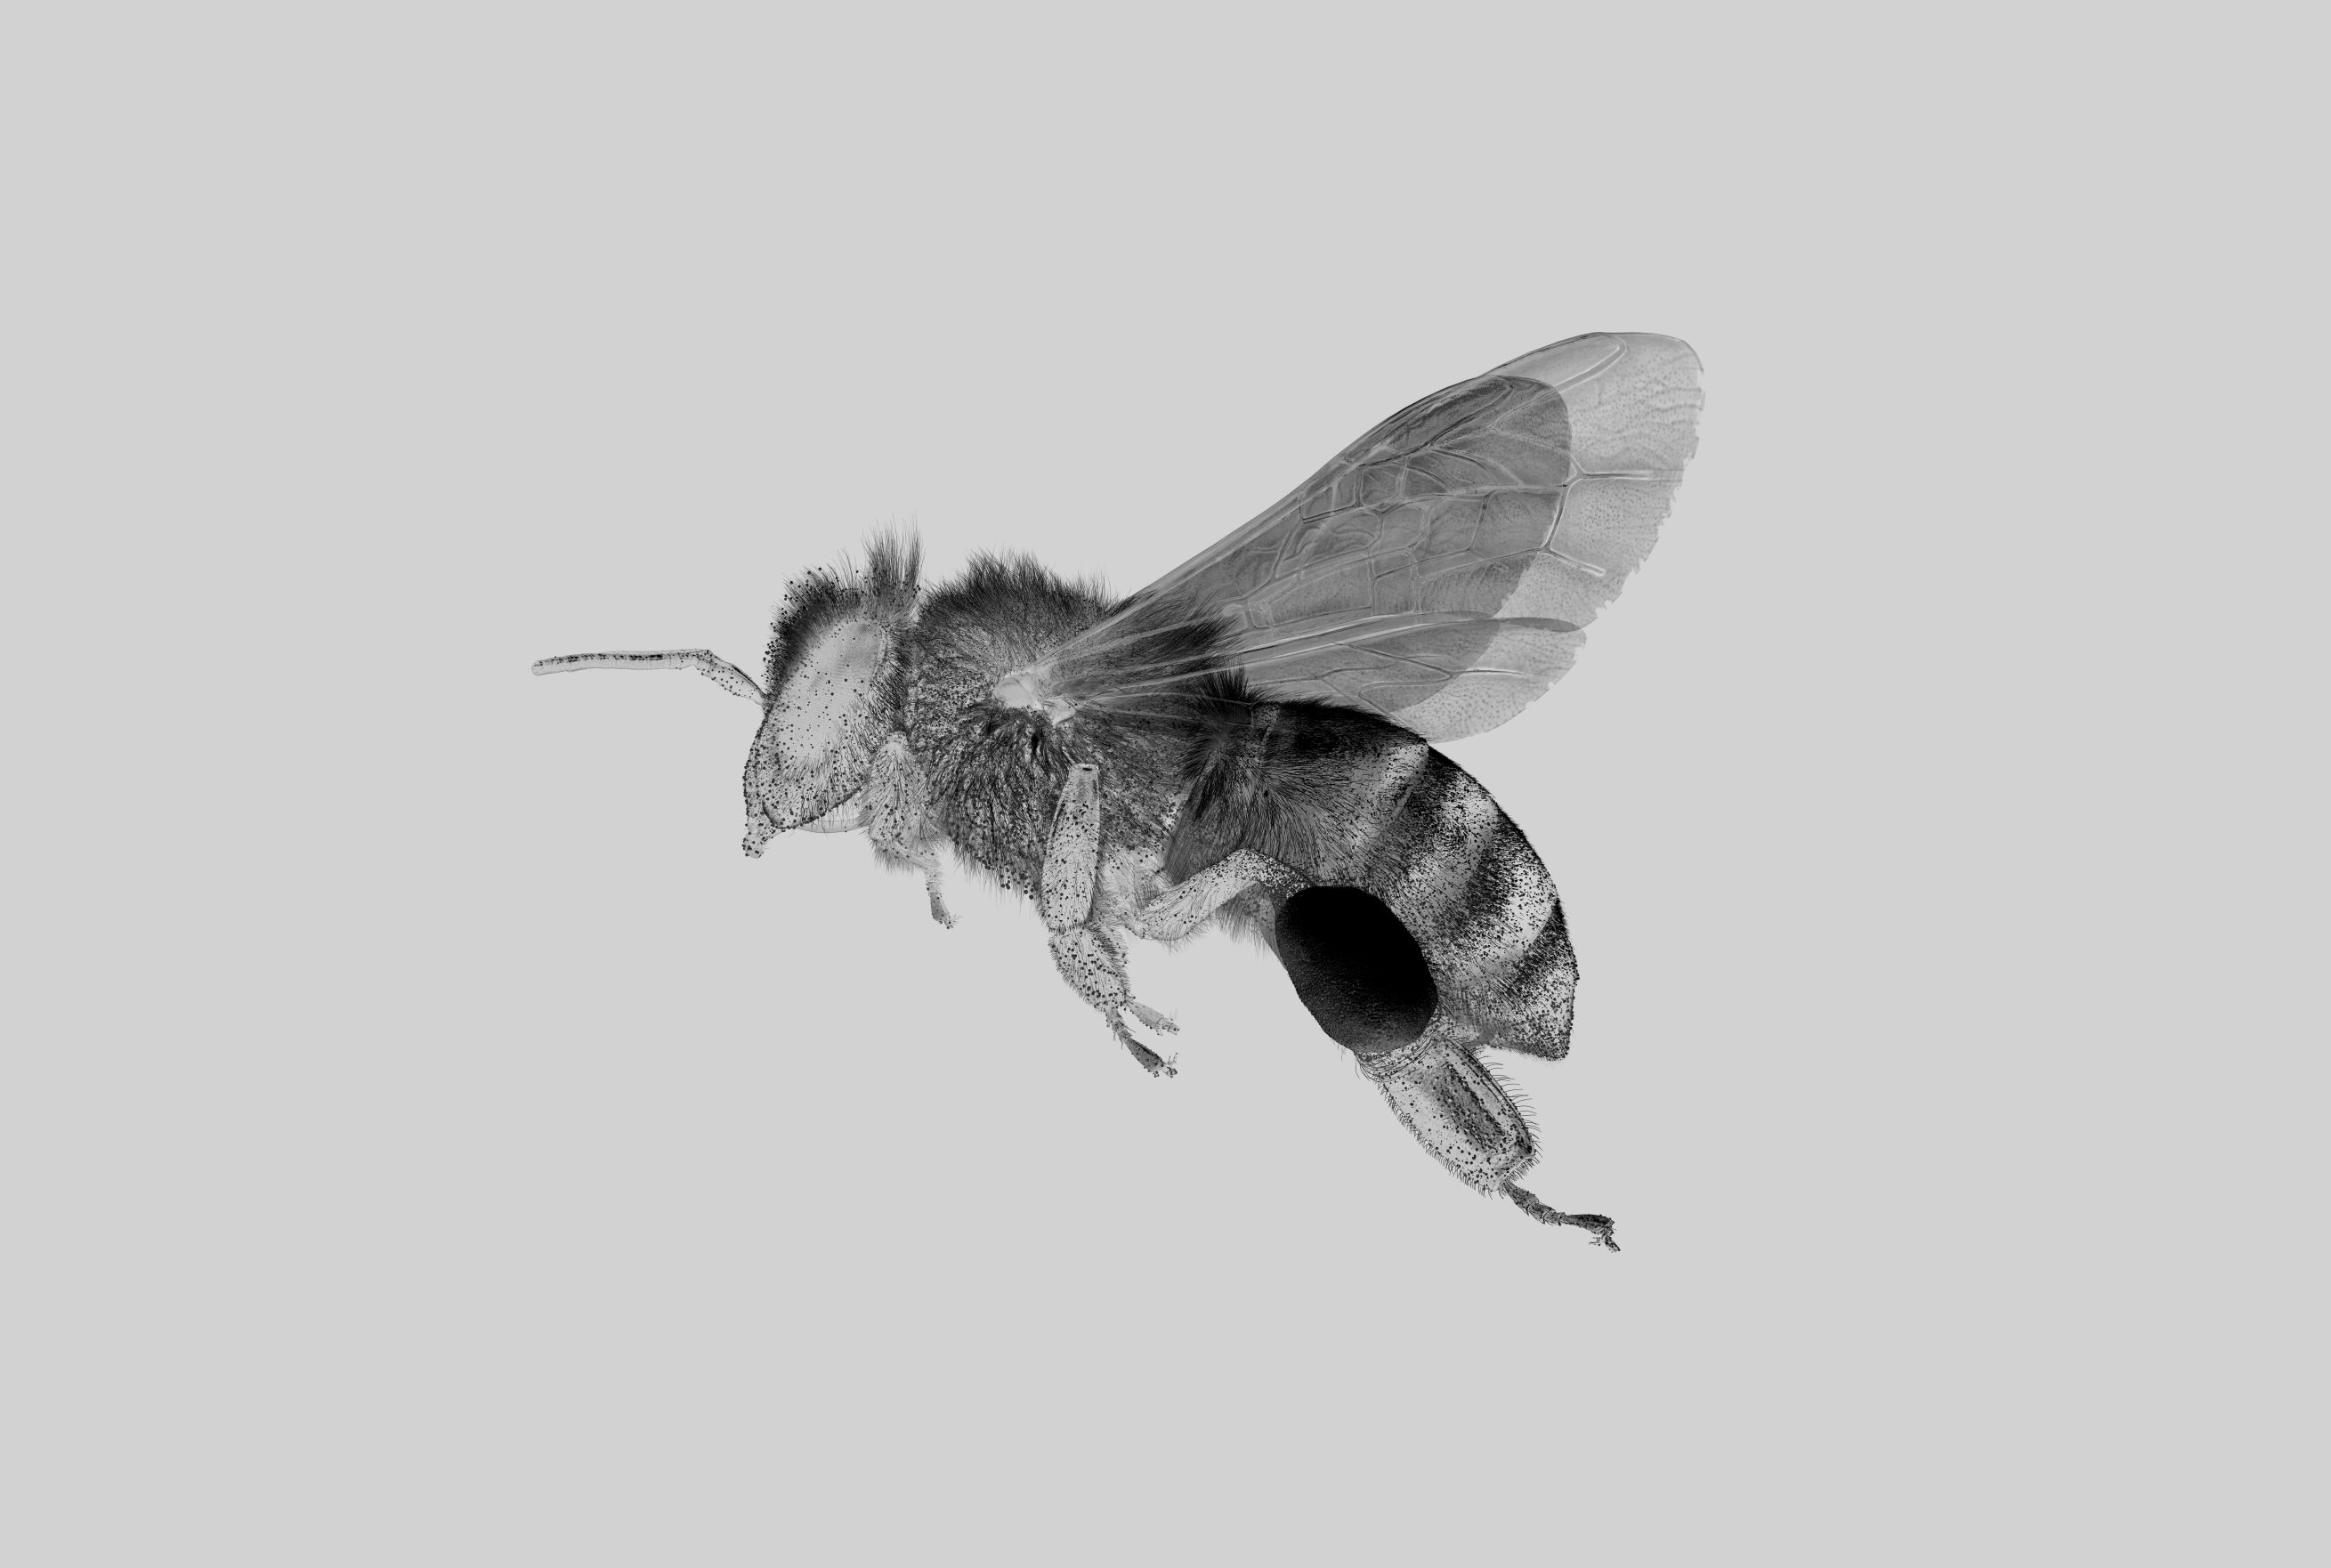 Bee SideProfile WITH Pollen PrintRes 300dpi 420x297mm B&W copy